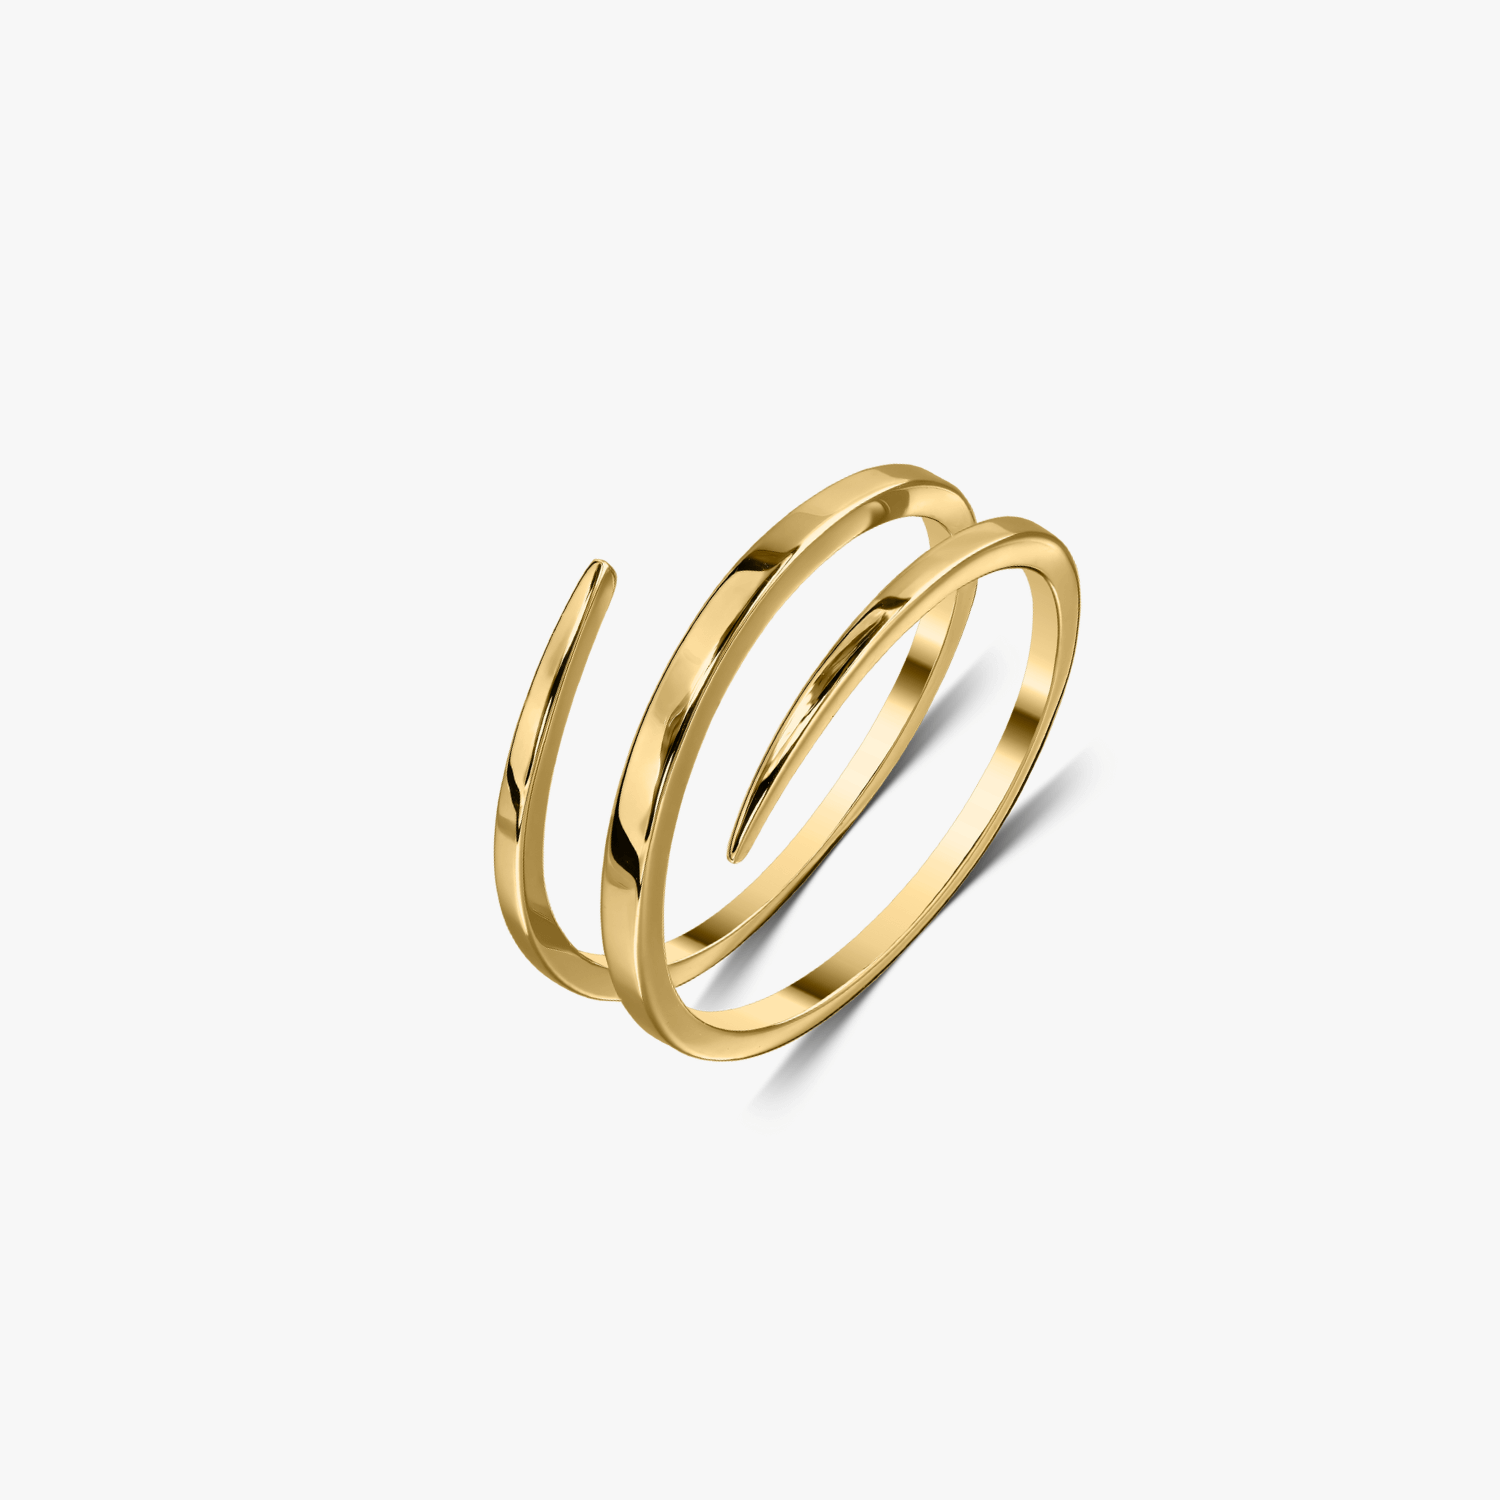 Spiral gold ring 